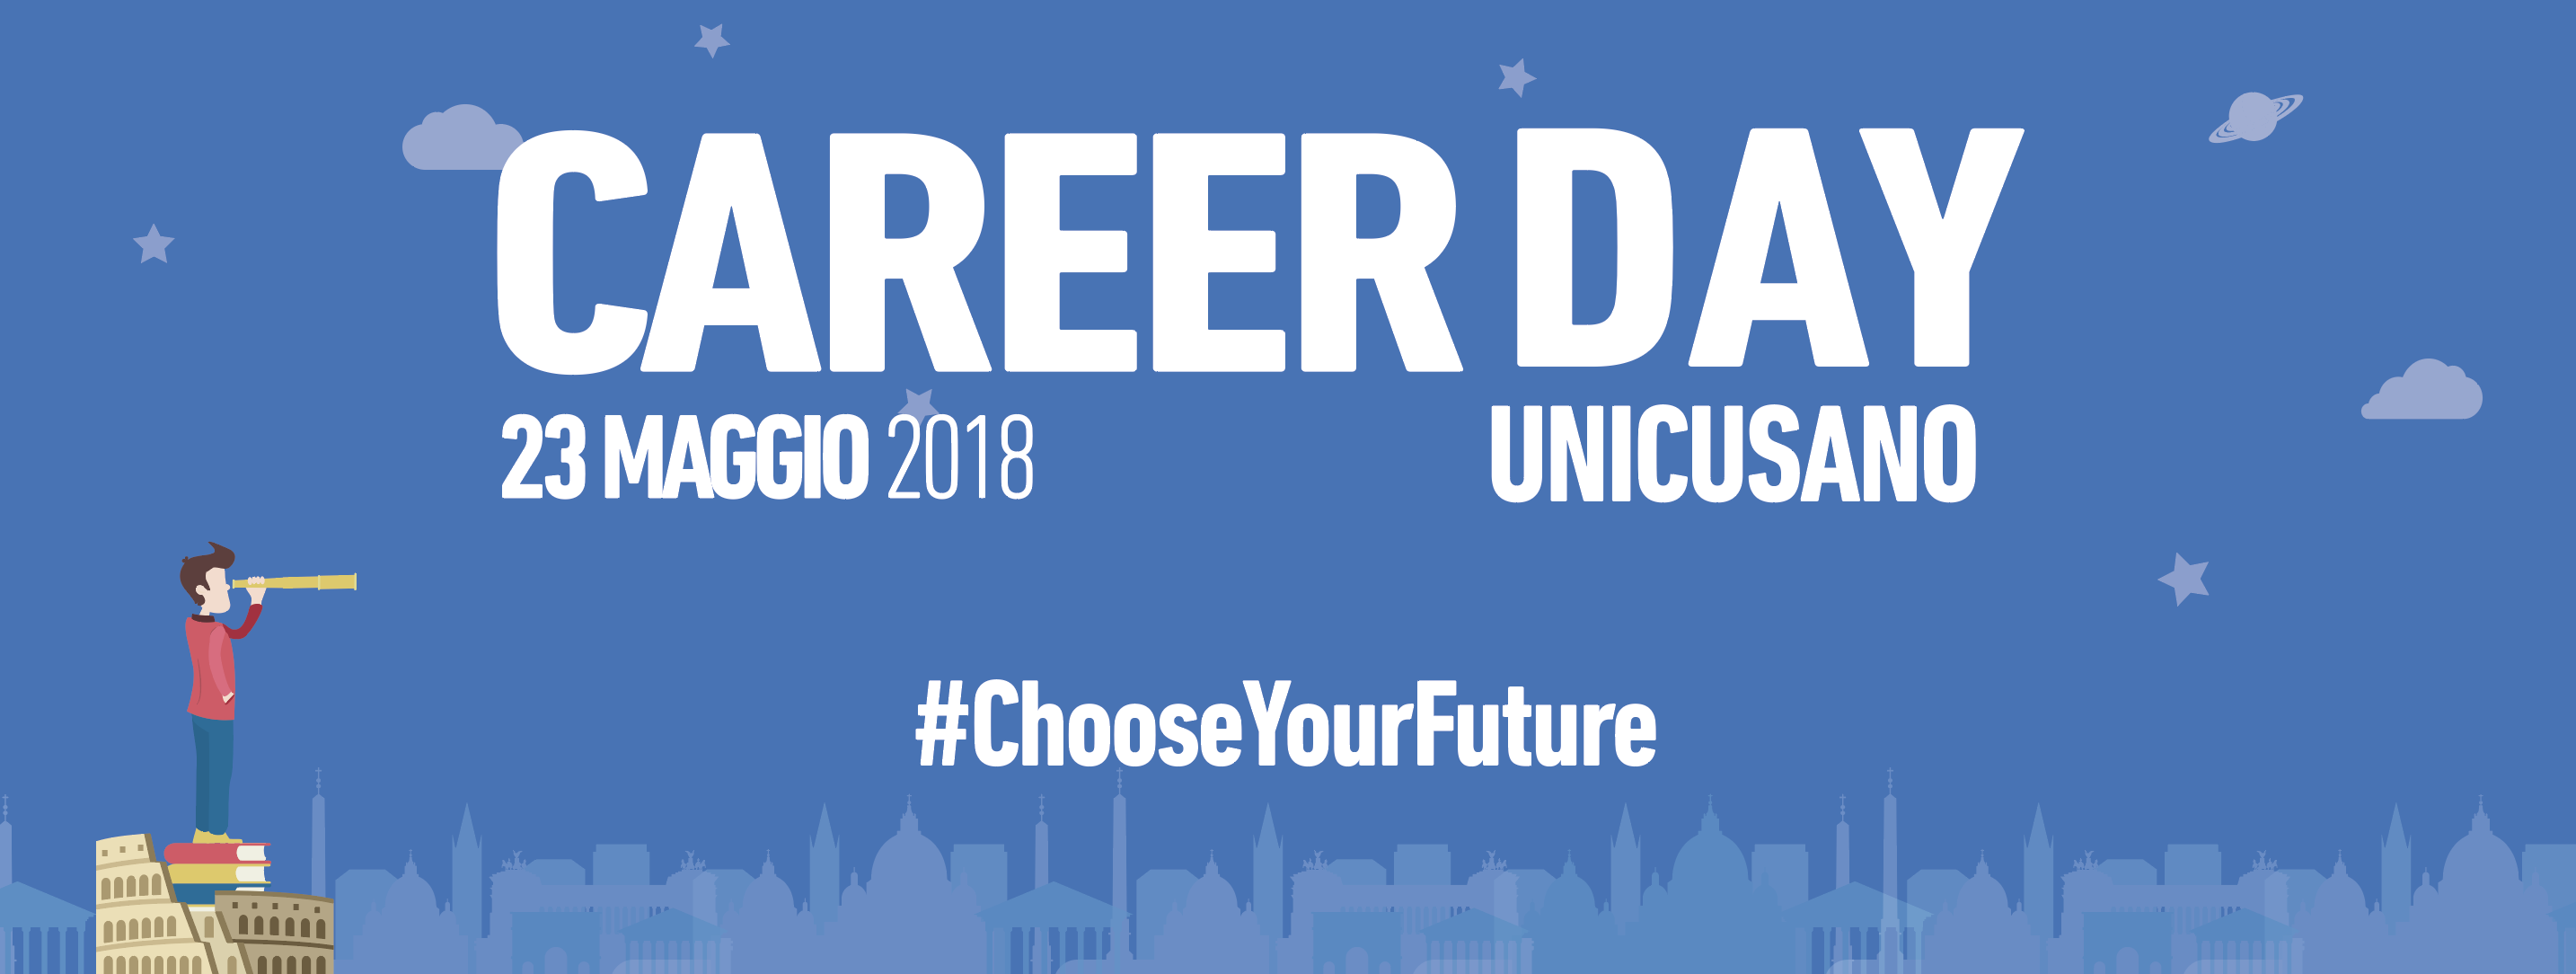 #ChooseYourFuture grazie al Career Day Unicusano